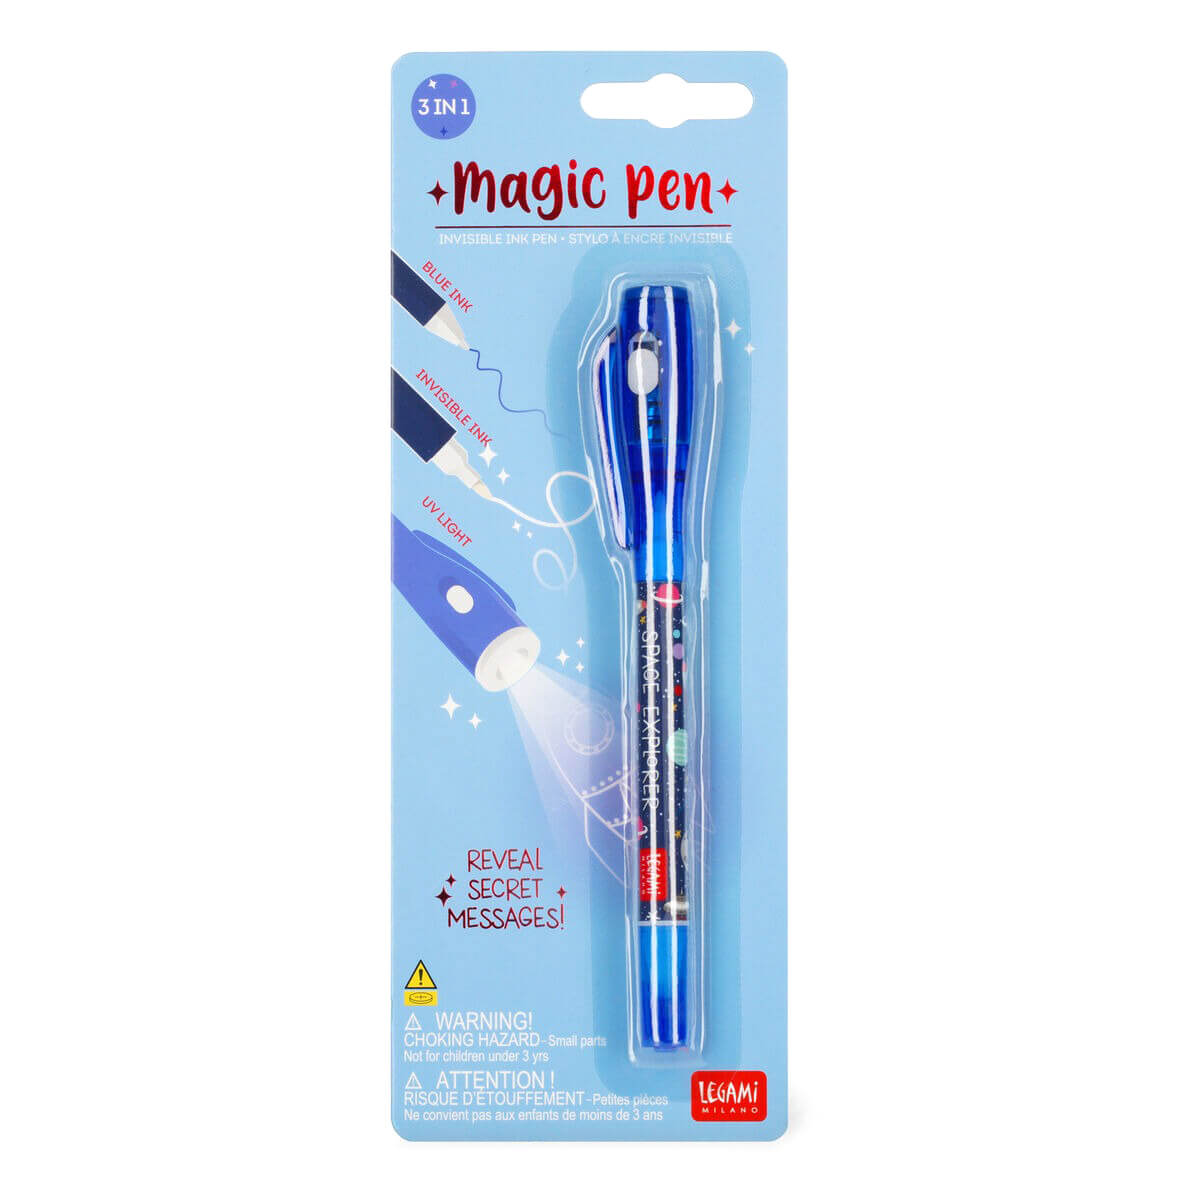 Legami Srl Magic Pen Invisible Ink Space